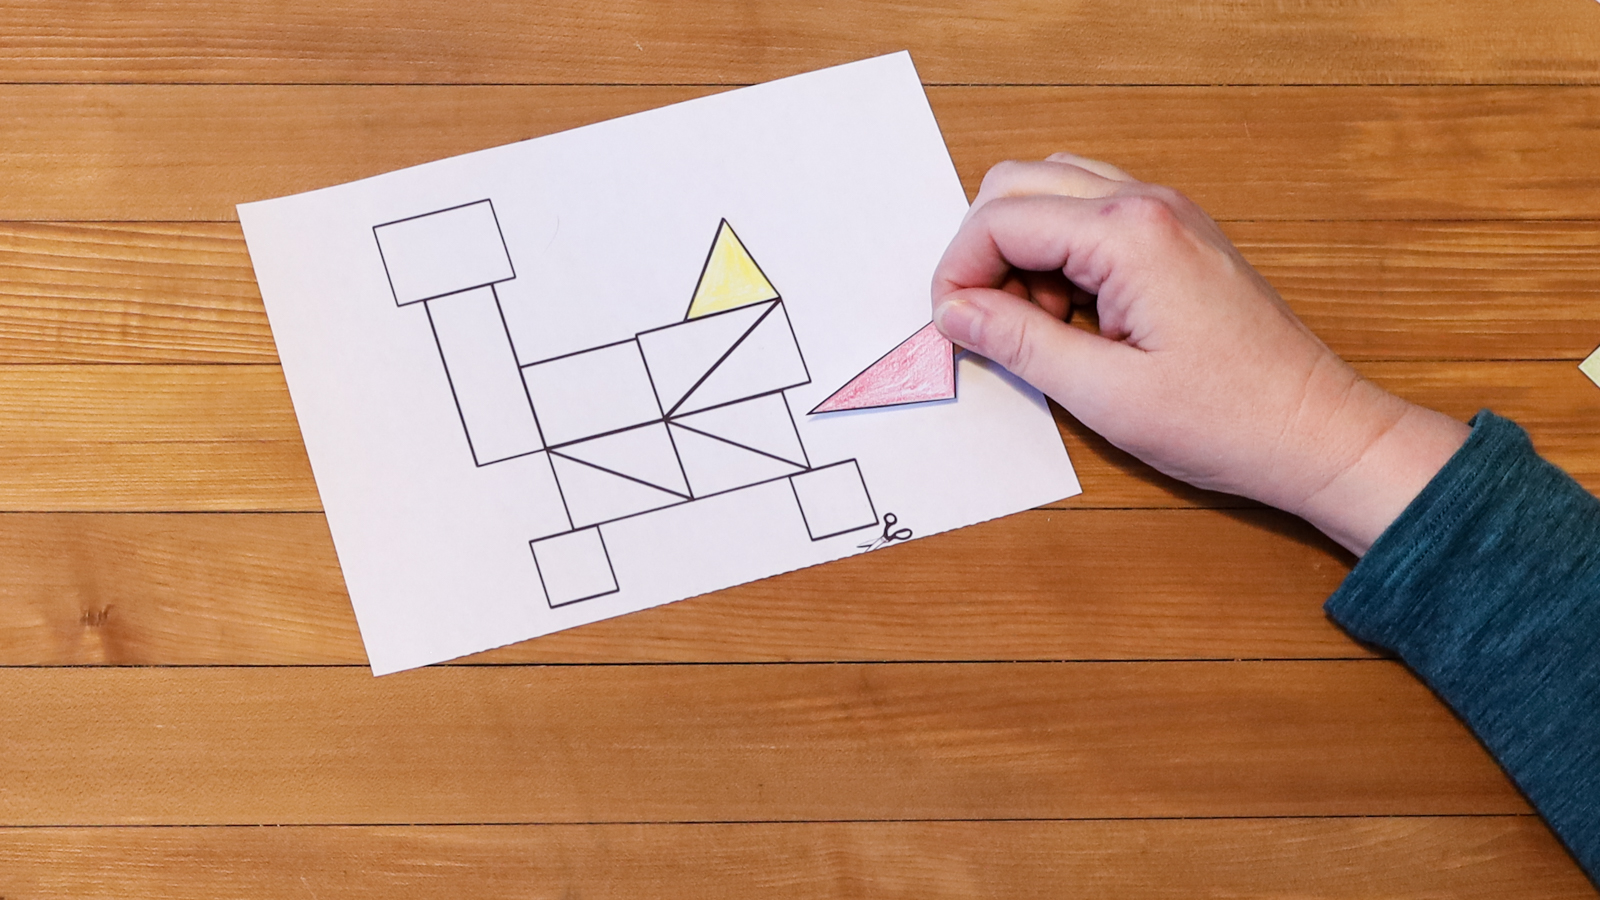 A person puts a shape onto the tangram rover outline.